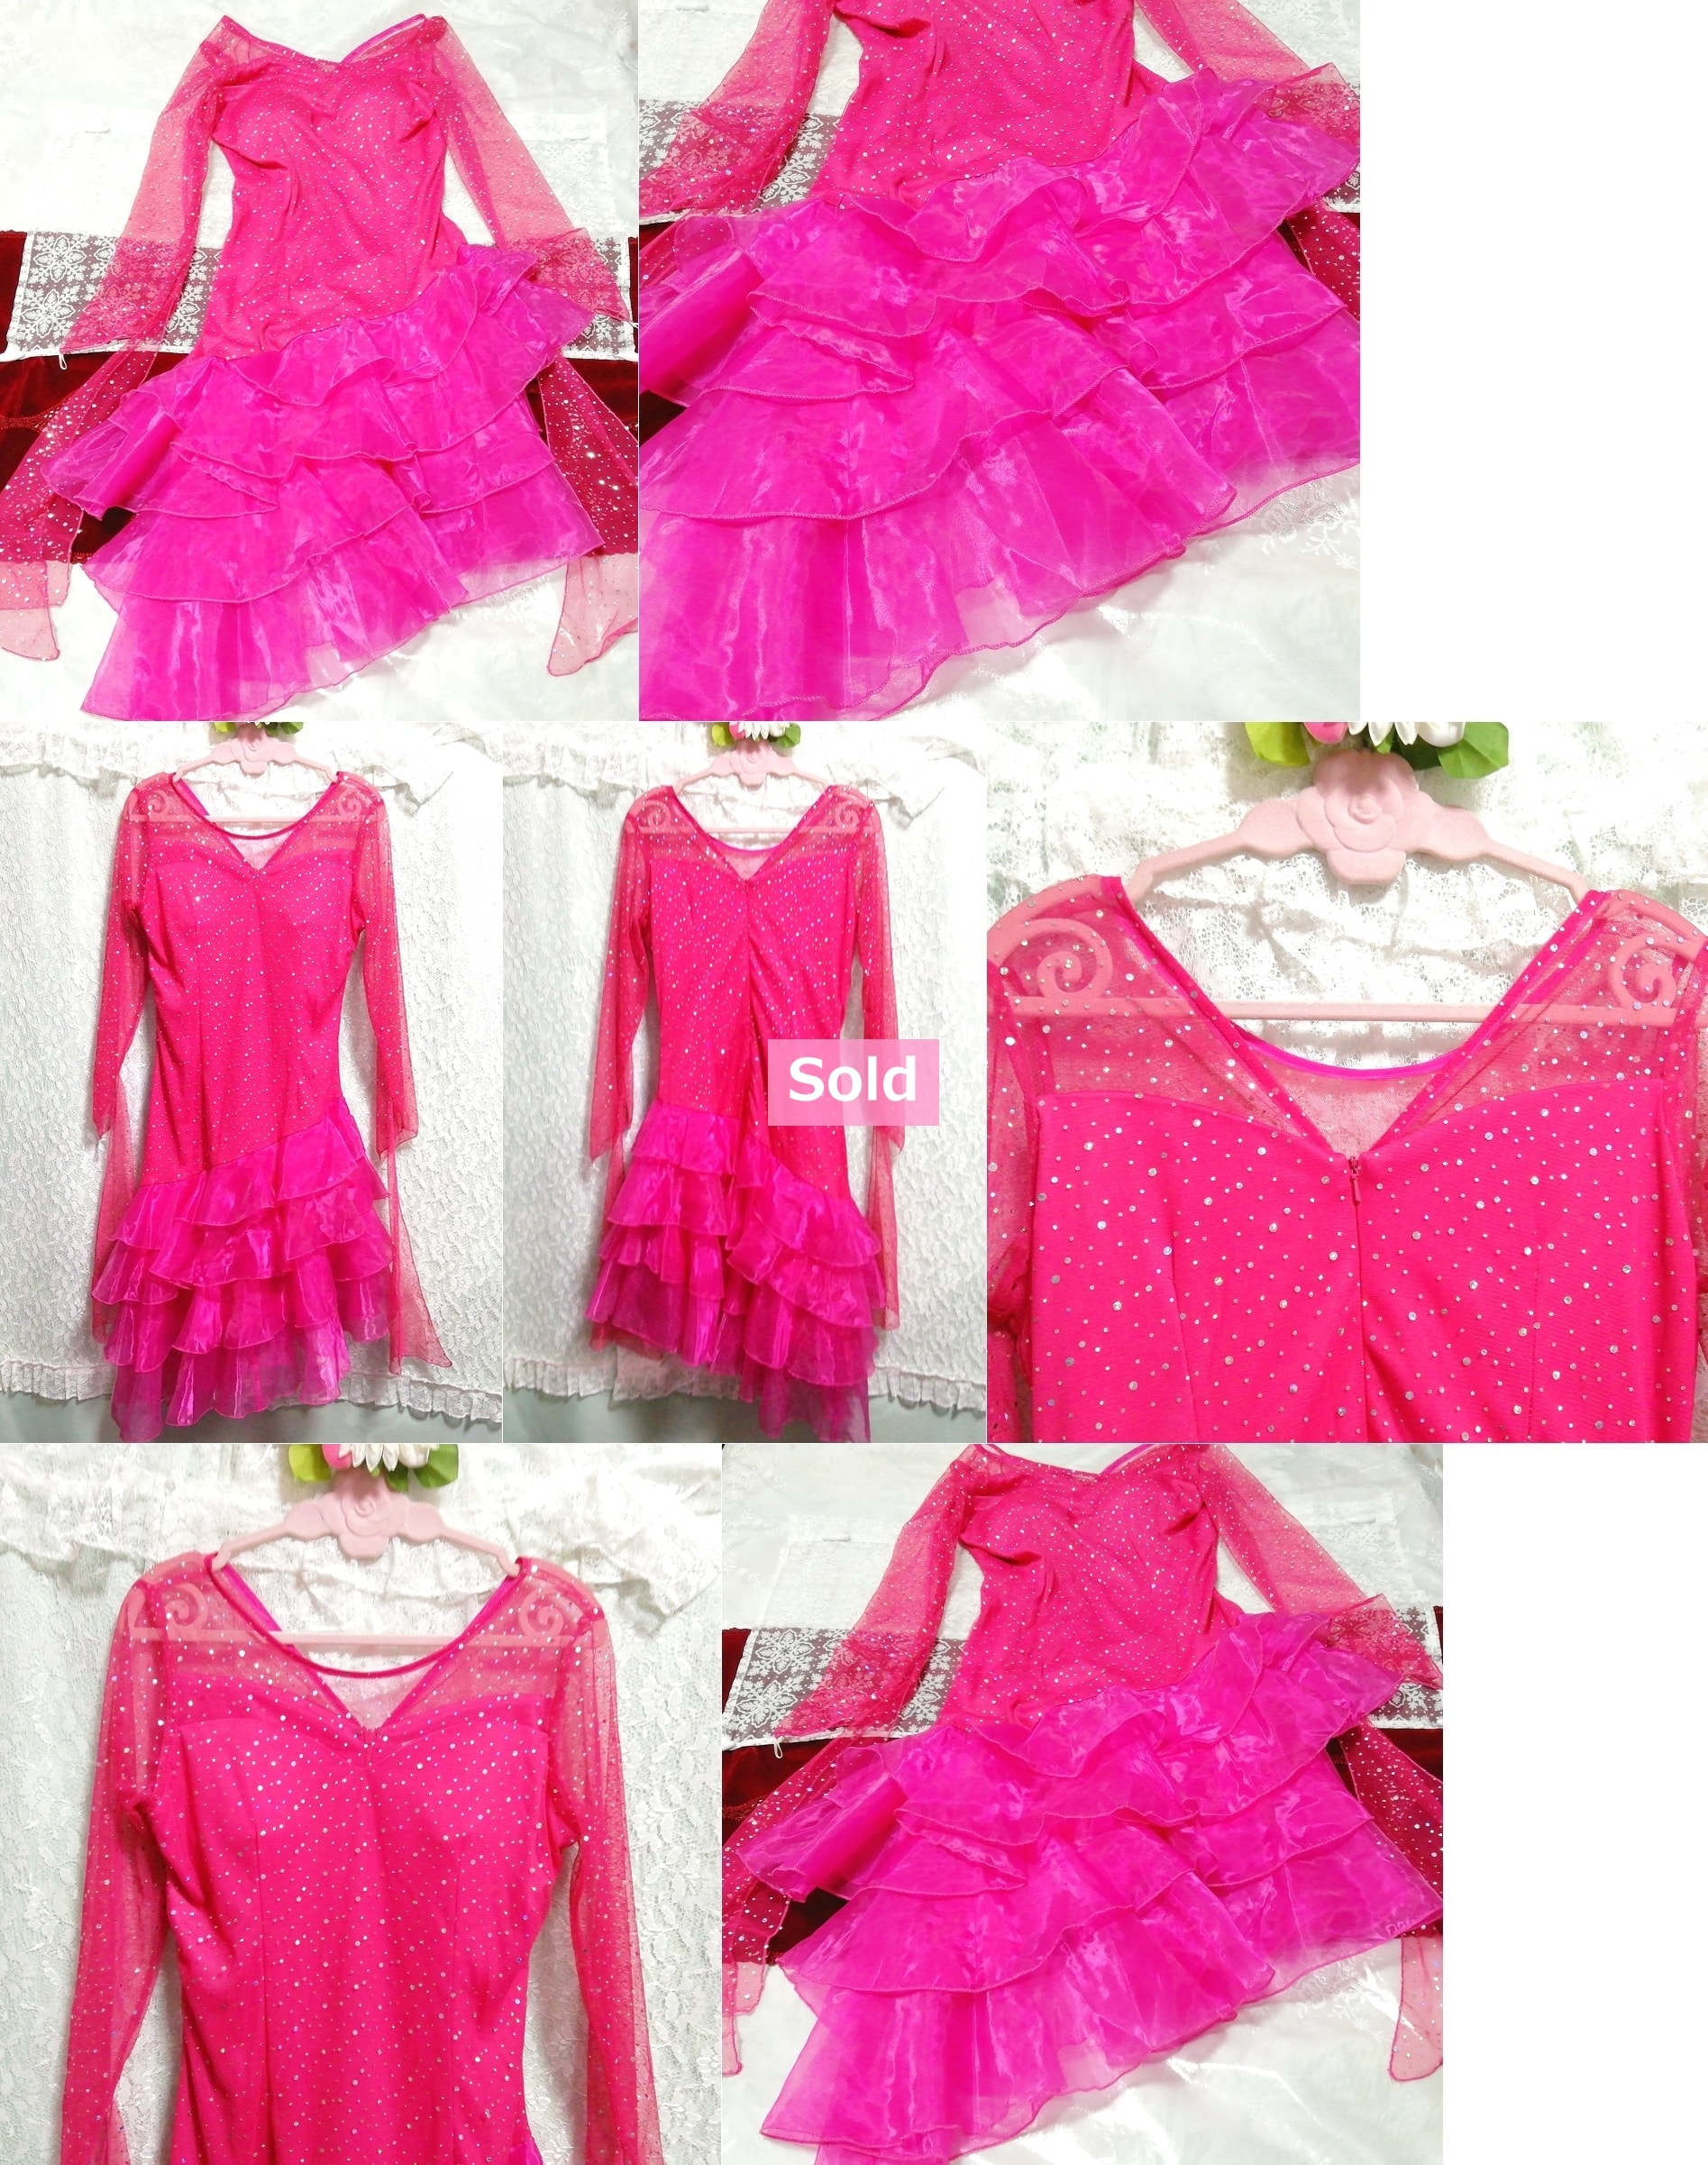 Pink ruffle mermaid nightgown nightwear long sleeve dress, fashion, ladies' fashion, nightwear, pajamas